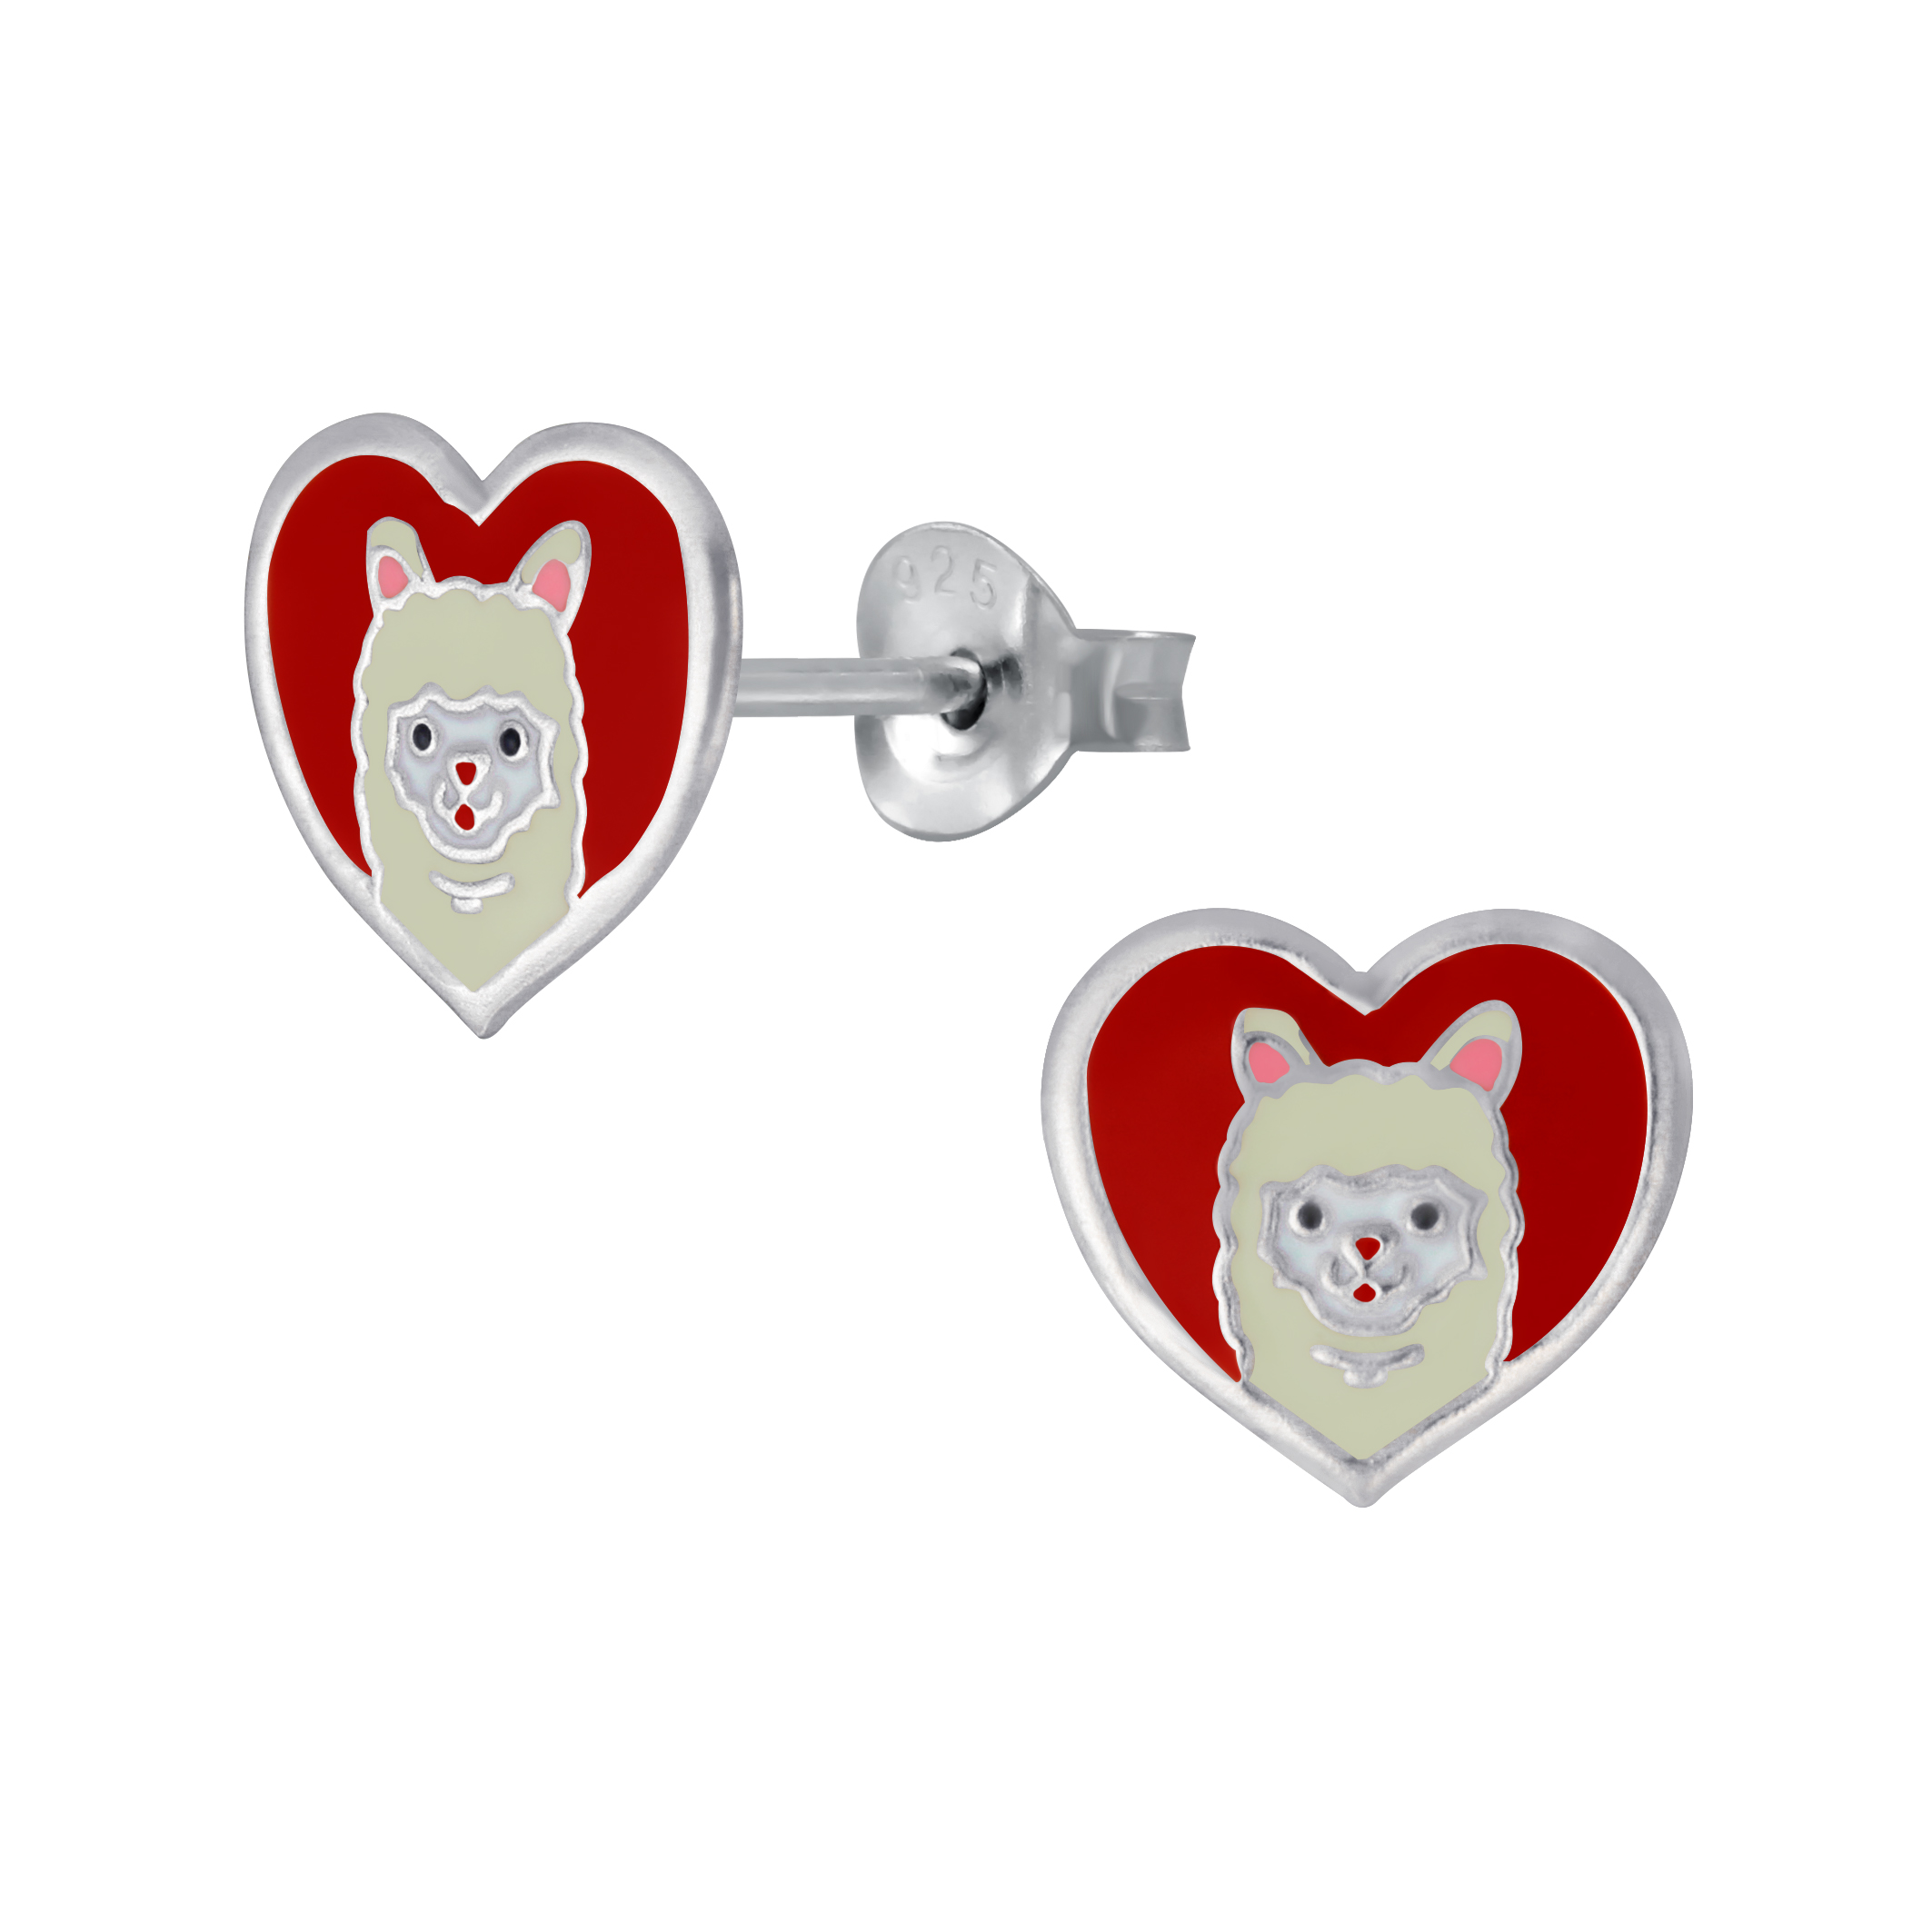 Llama in red heart nickel-free sterling silver stud earrings